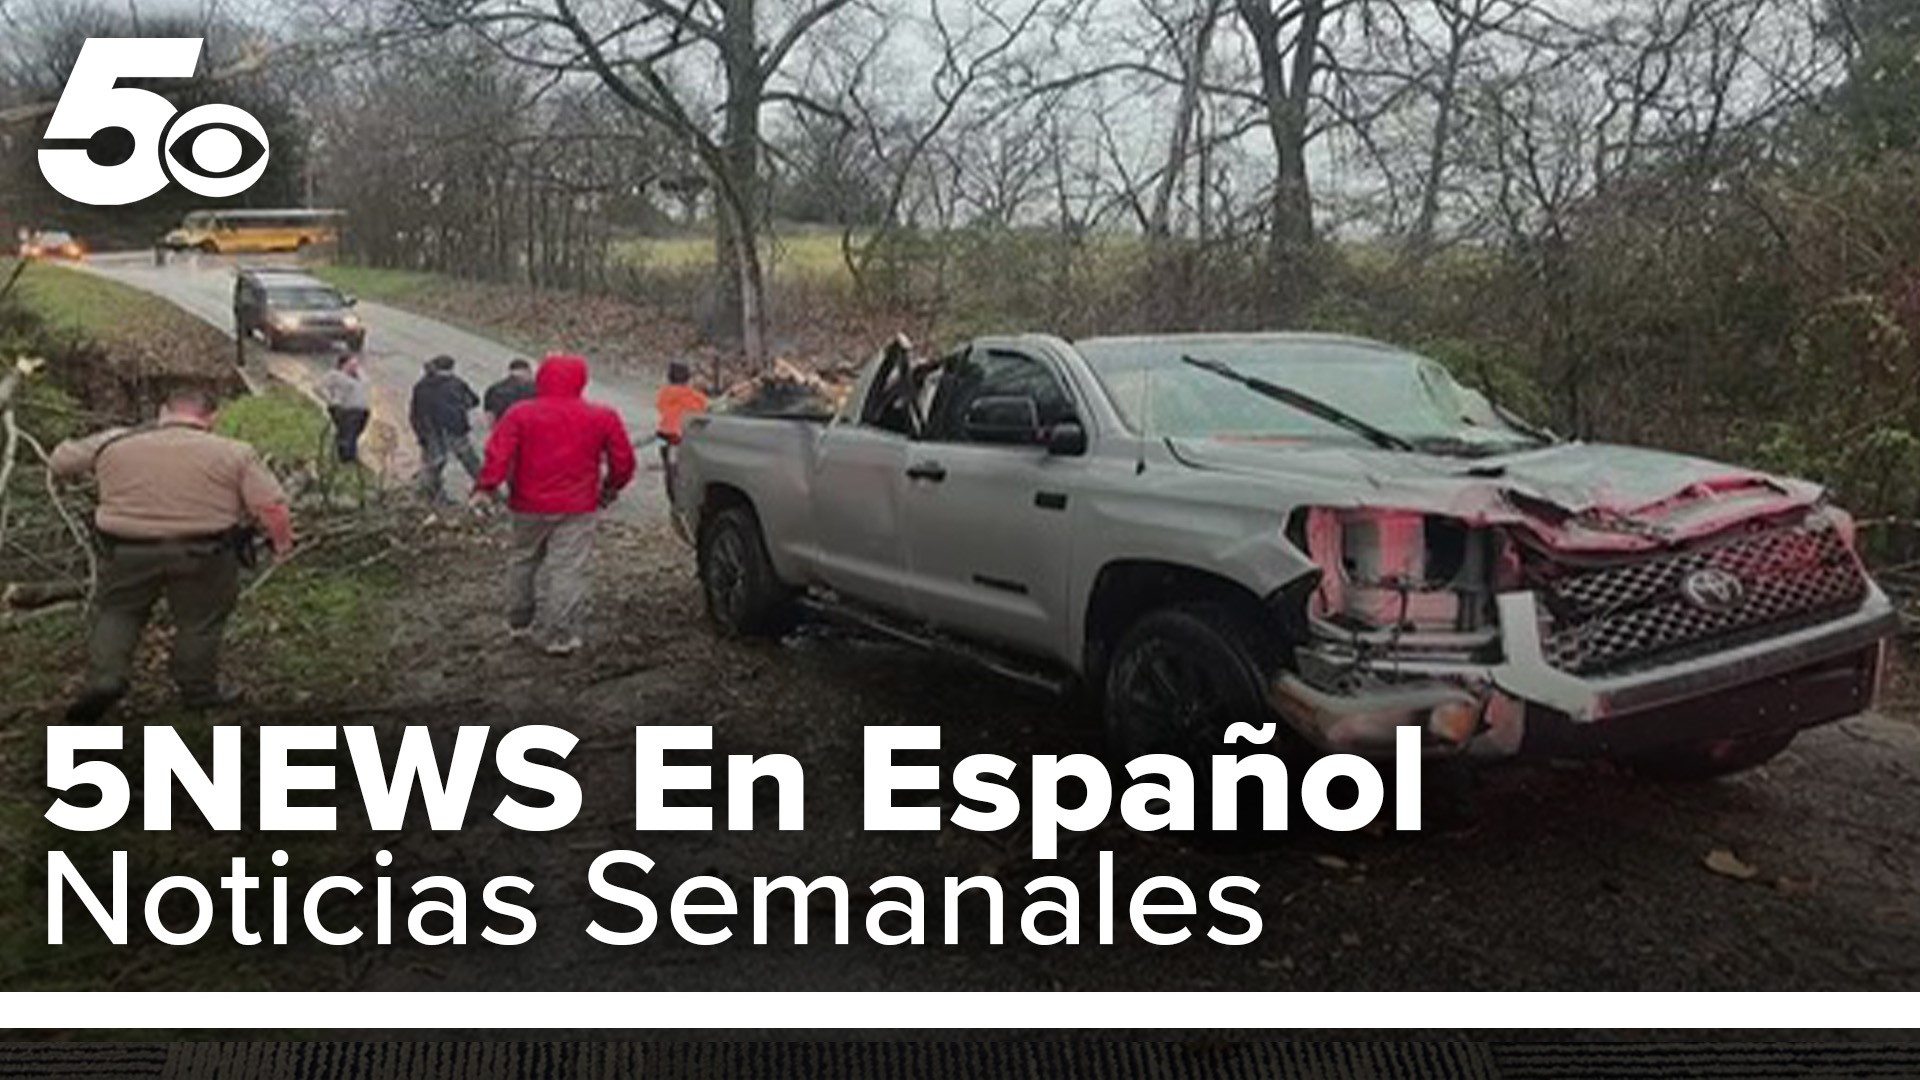 Visite 5NEWS En Español para mas noticias.